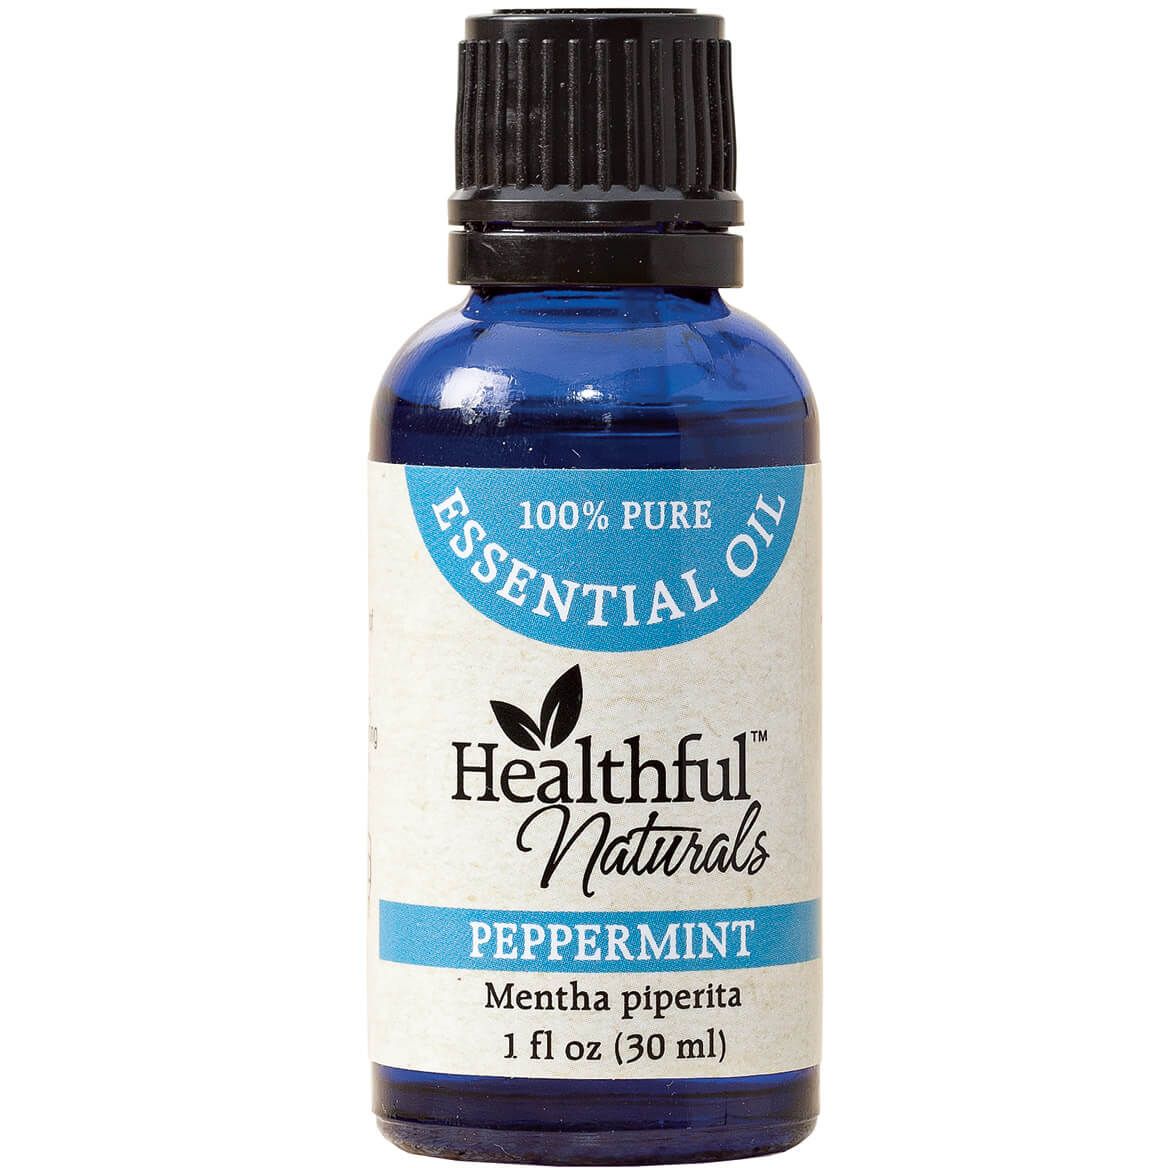 Healthful™ Naturals Peppermint Essential Oil, 30 ml + '-' + 353460